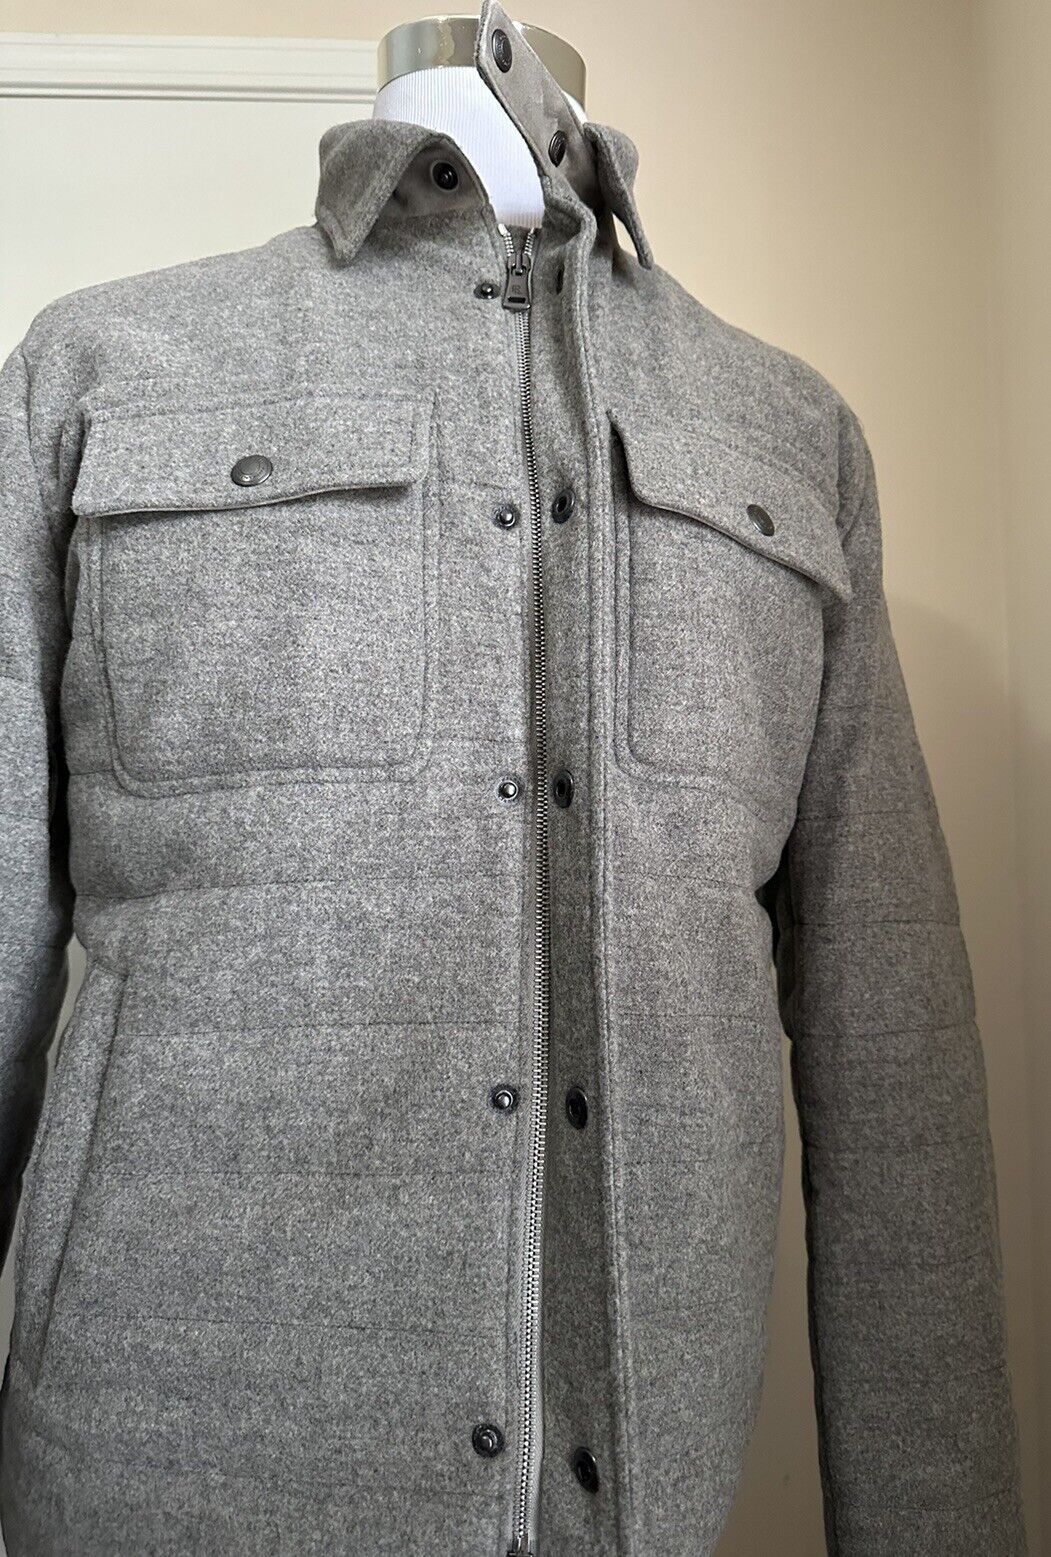 New $1995 Ralph Lauren Purple Label Men Jacket Coat Shirt Gray Size XL